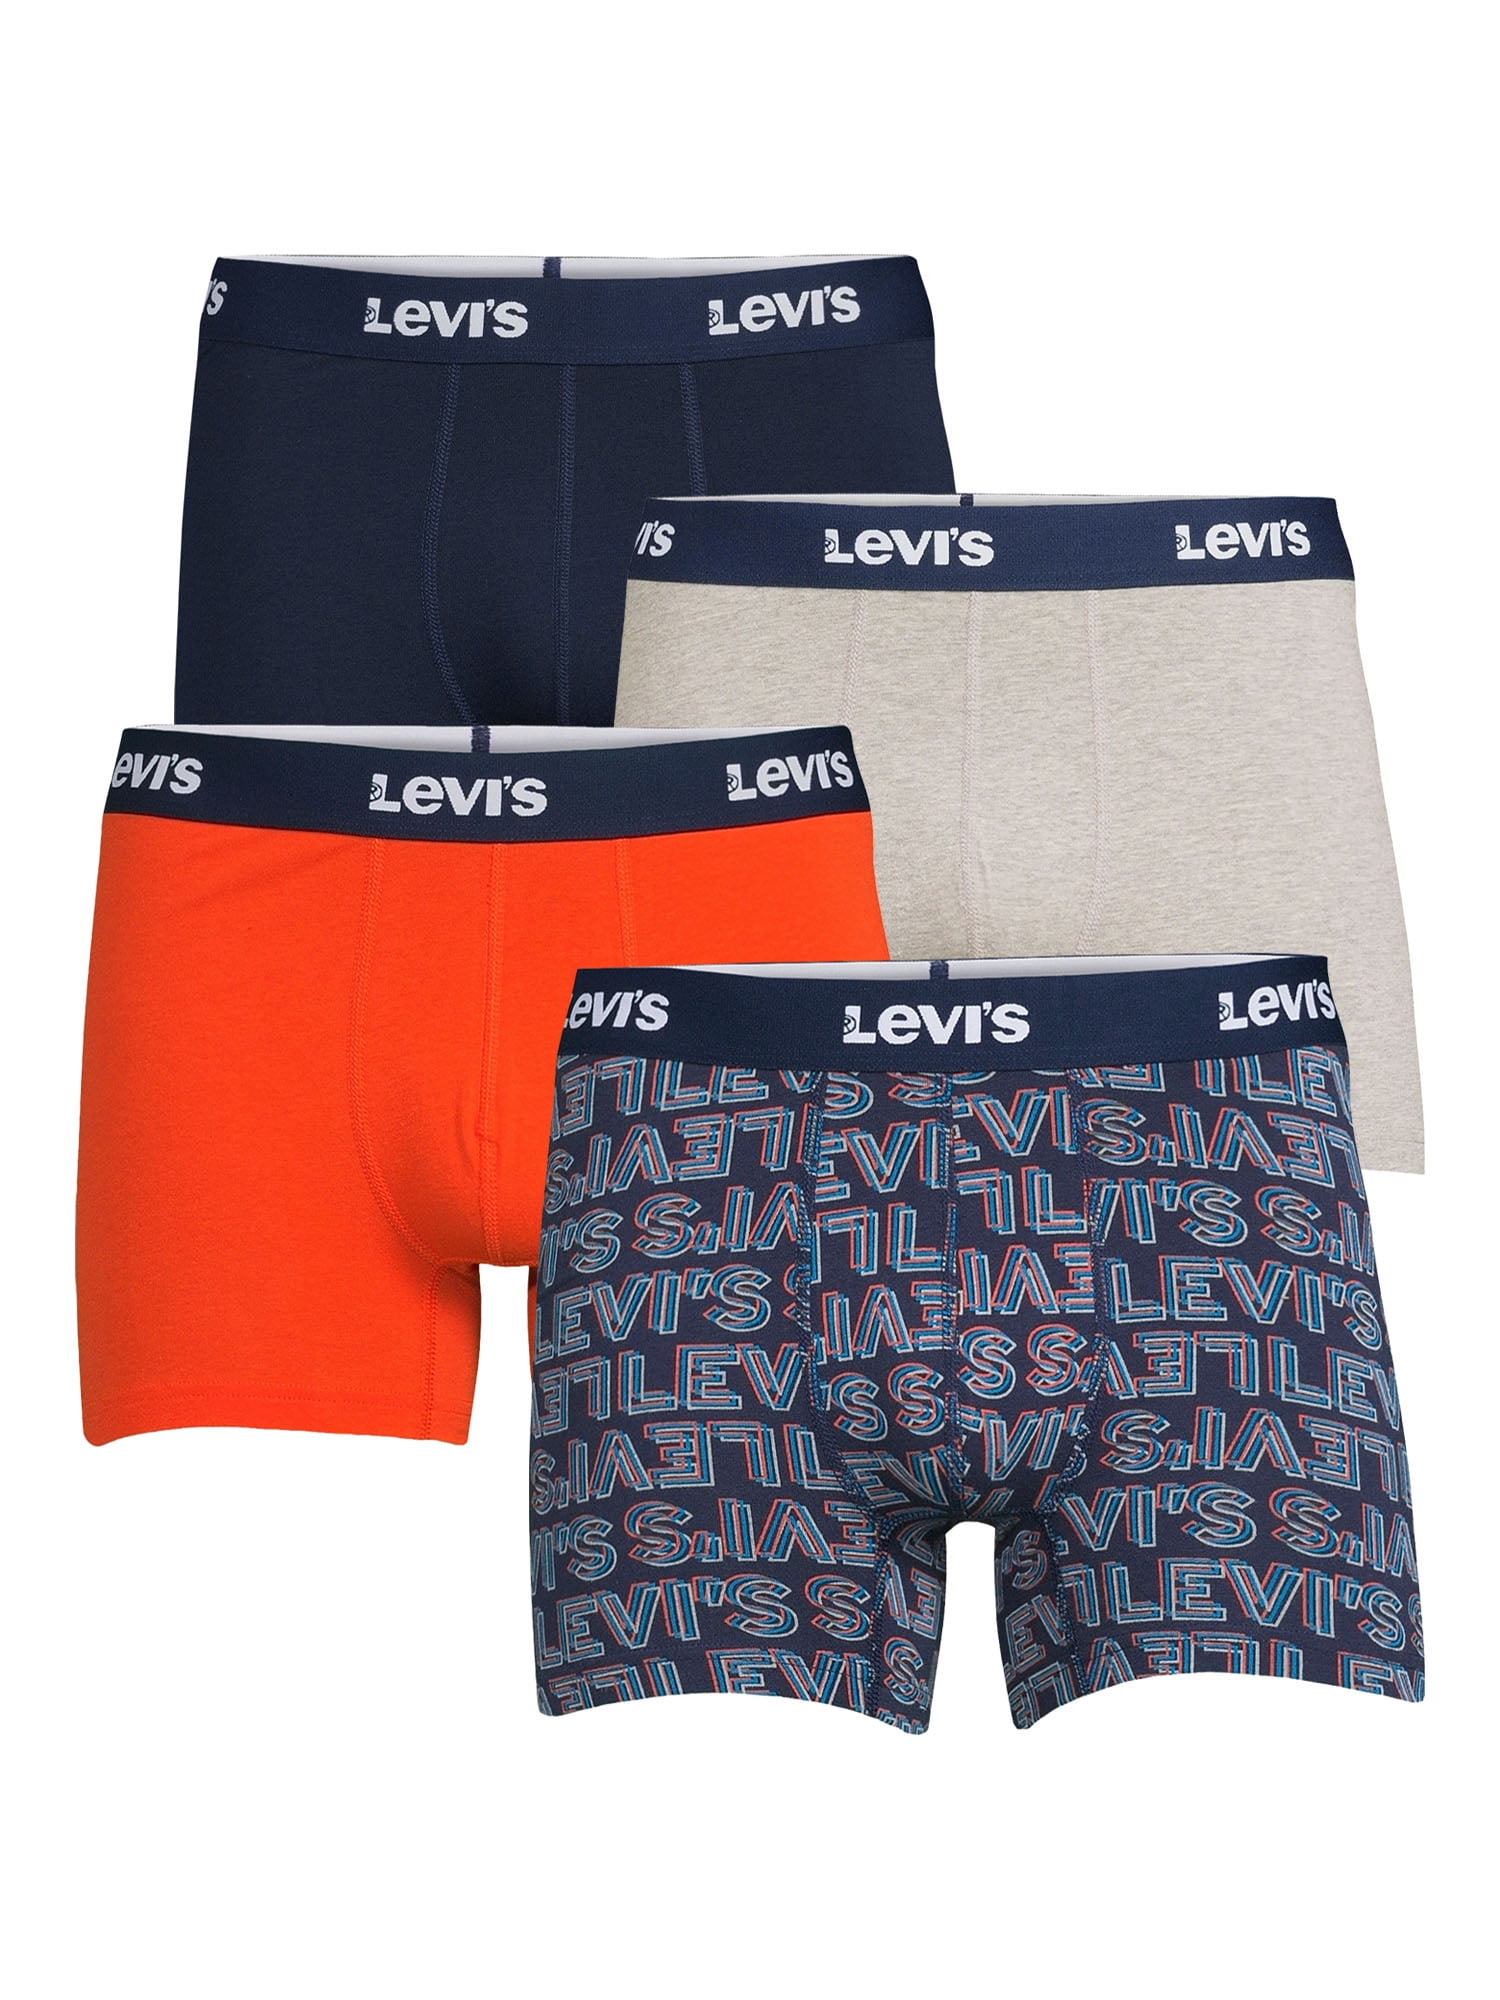 Levi's Mens Boxer Briefs Breathable Stretch Underwear 4 Pack 